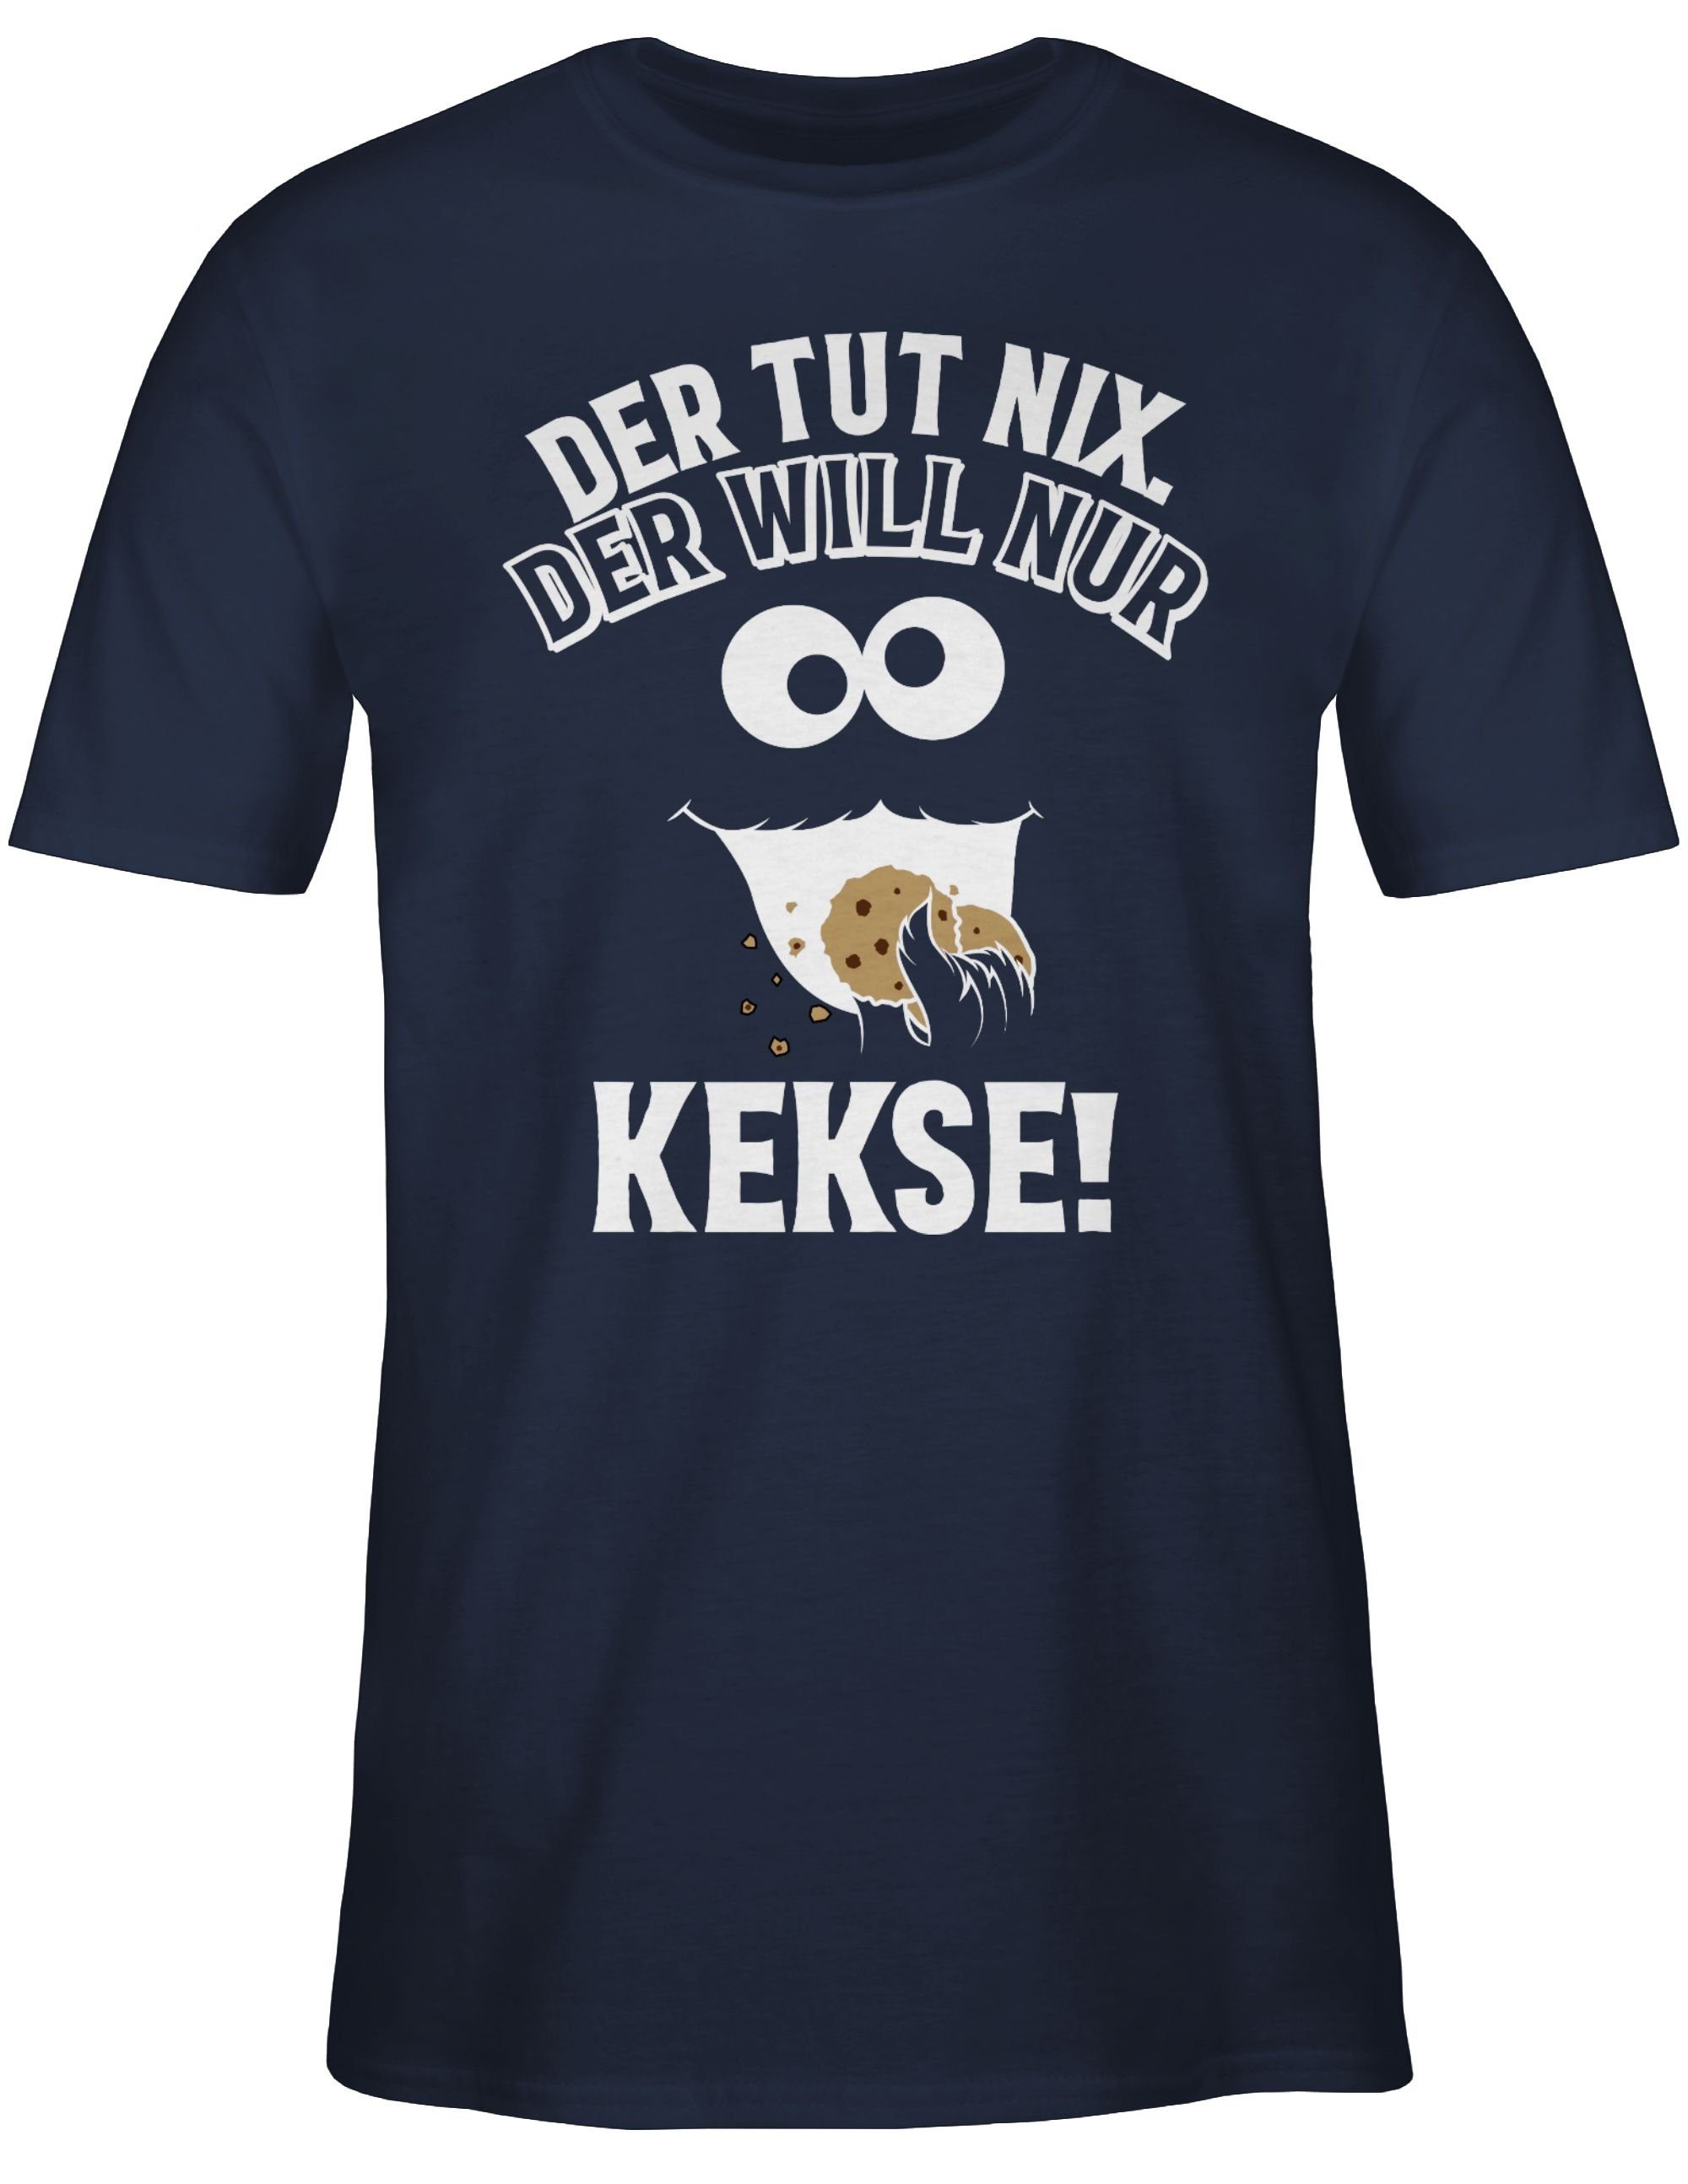 Shirtracer T-Shirt Blau Cookie will Keksmons 03 Outfit Karneval Der tut Navy nur Kekse! Der nix. Krümelmonster Monster